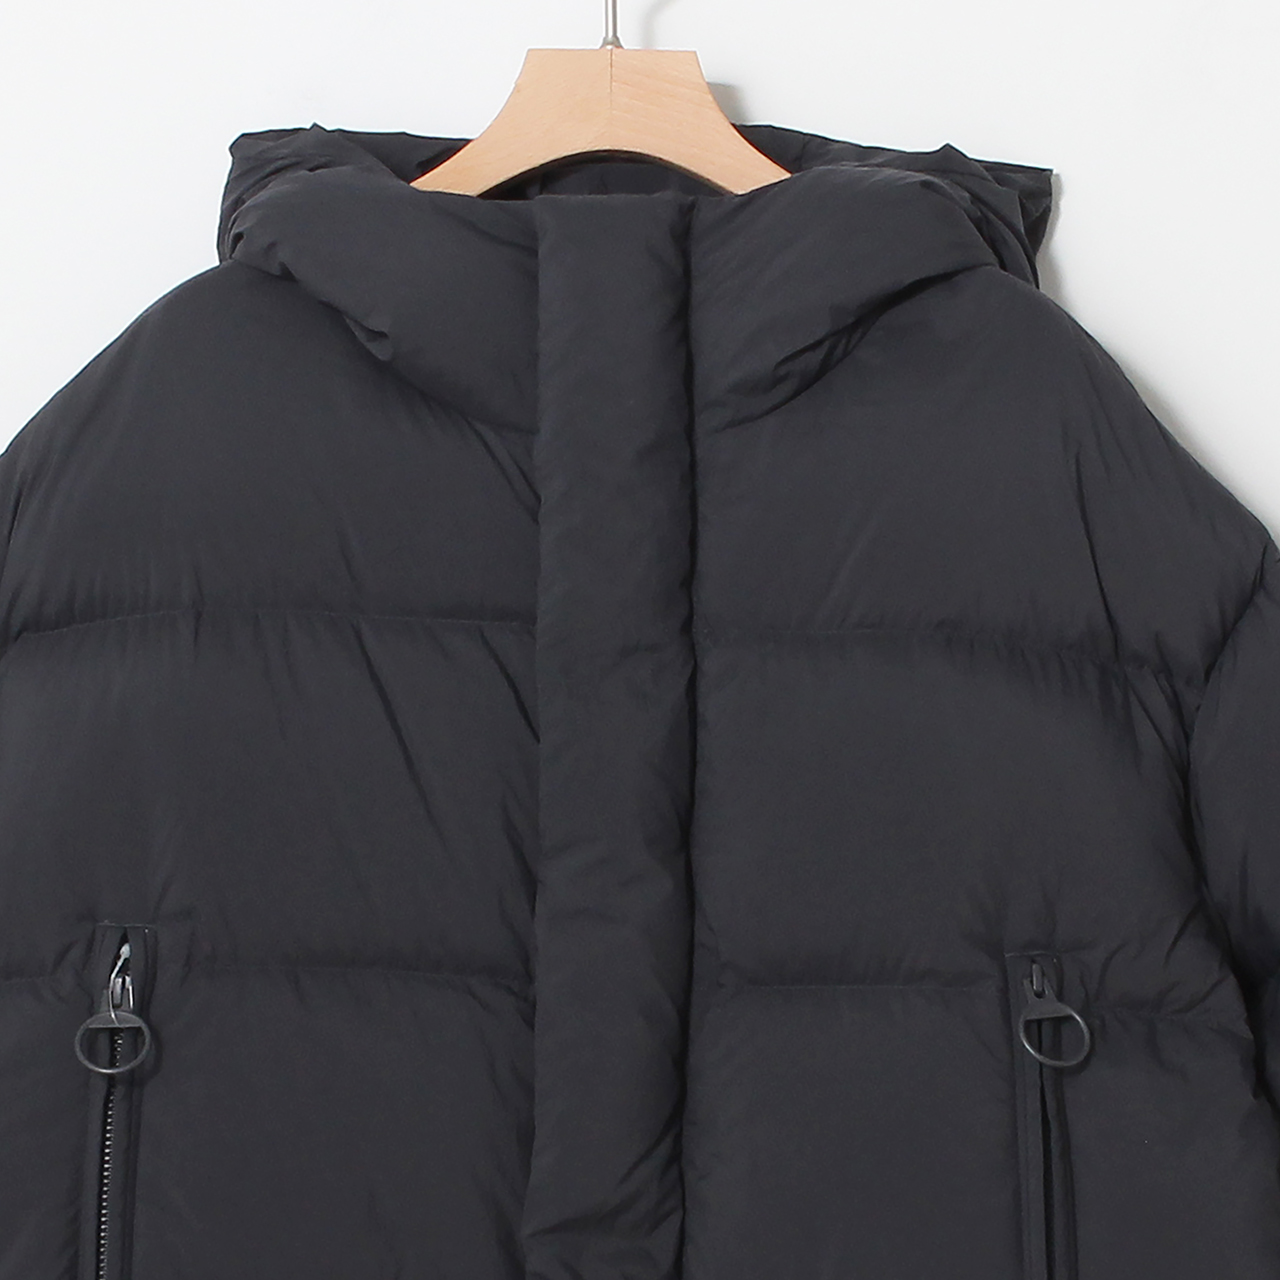 Poplar Jacket - Coal Grey • Gymphlex • Beautiful, practical clothing ...